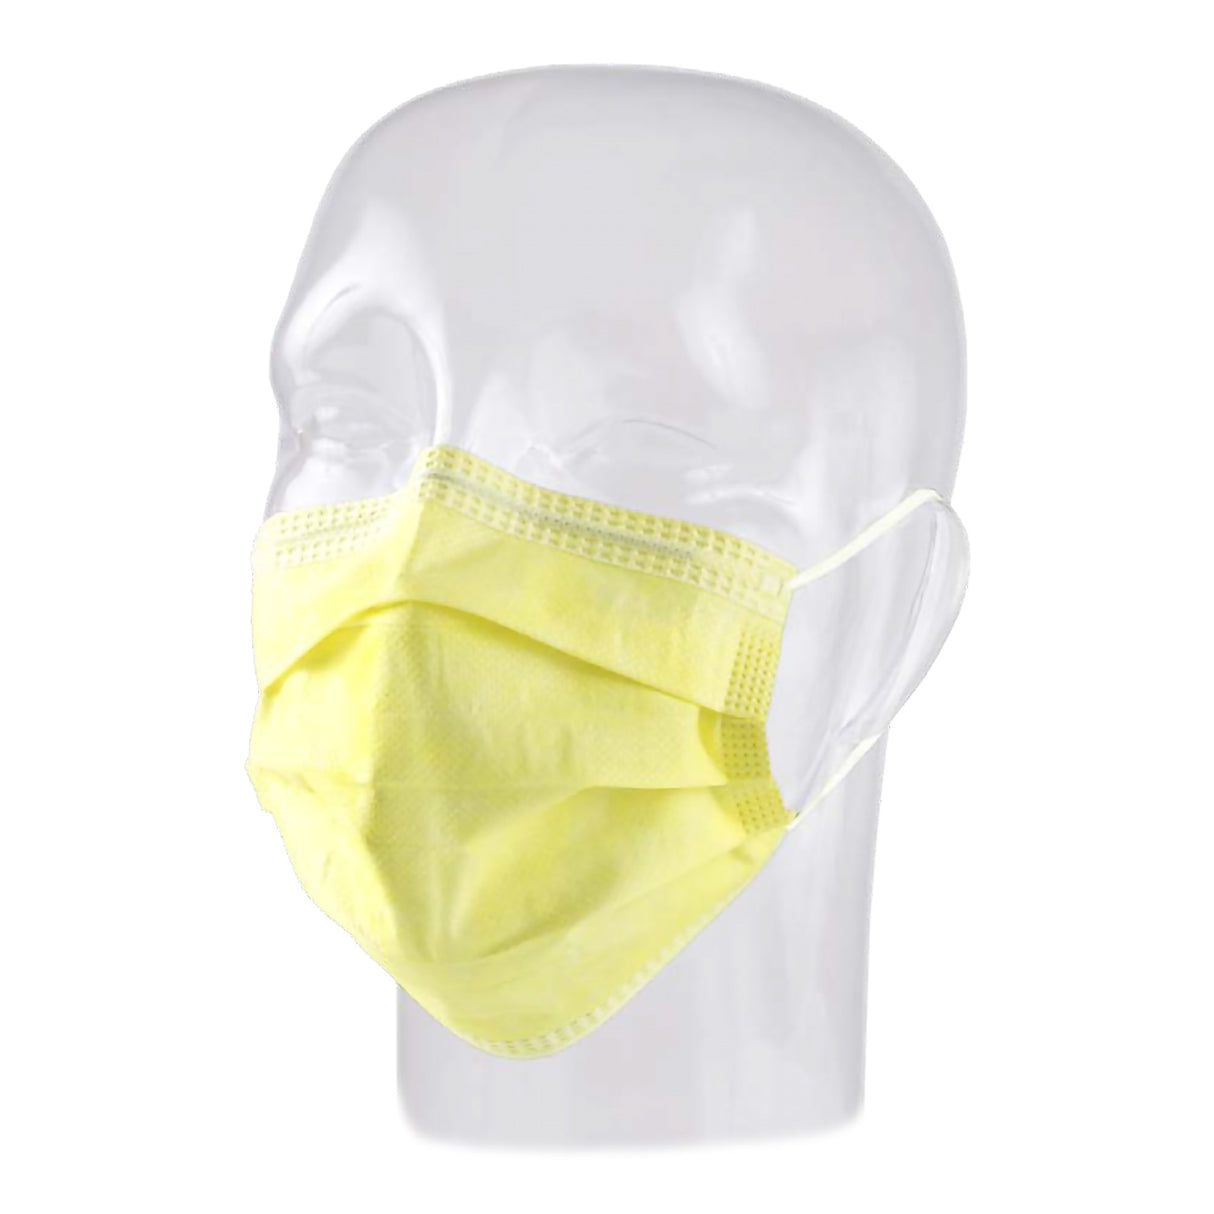 Precept Procedure Mask Pleated Earloops Mask